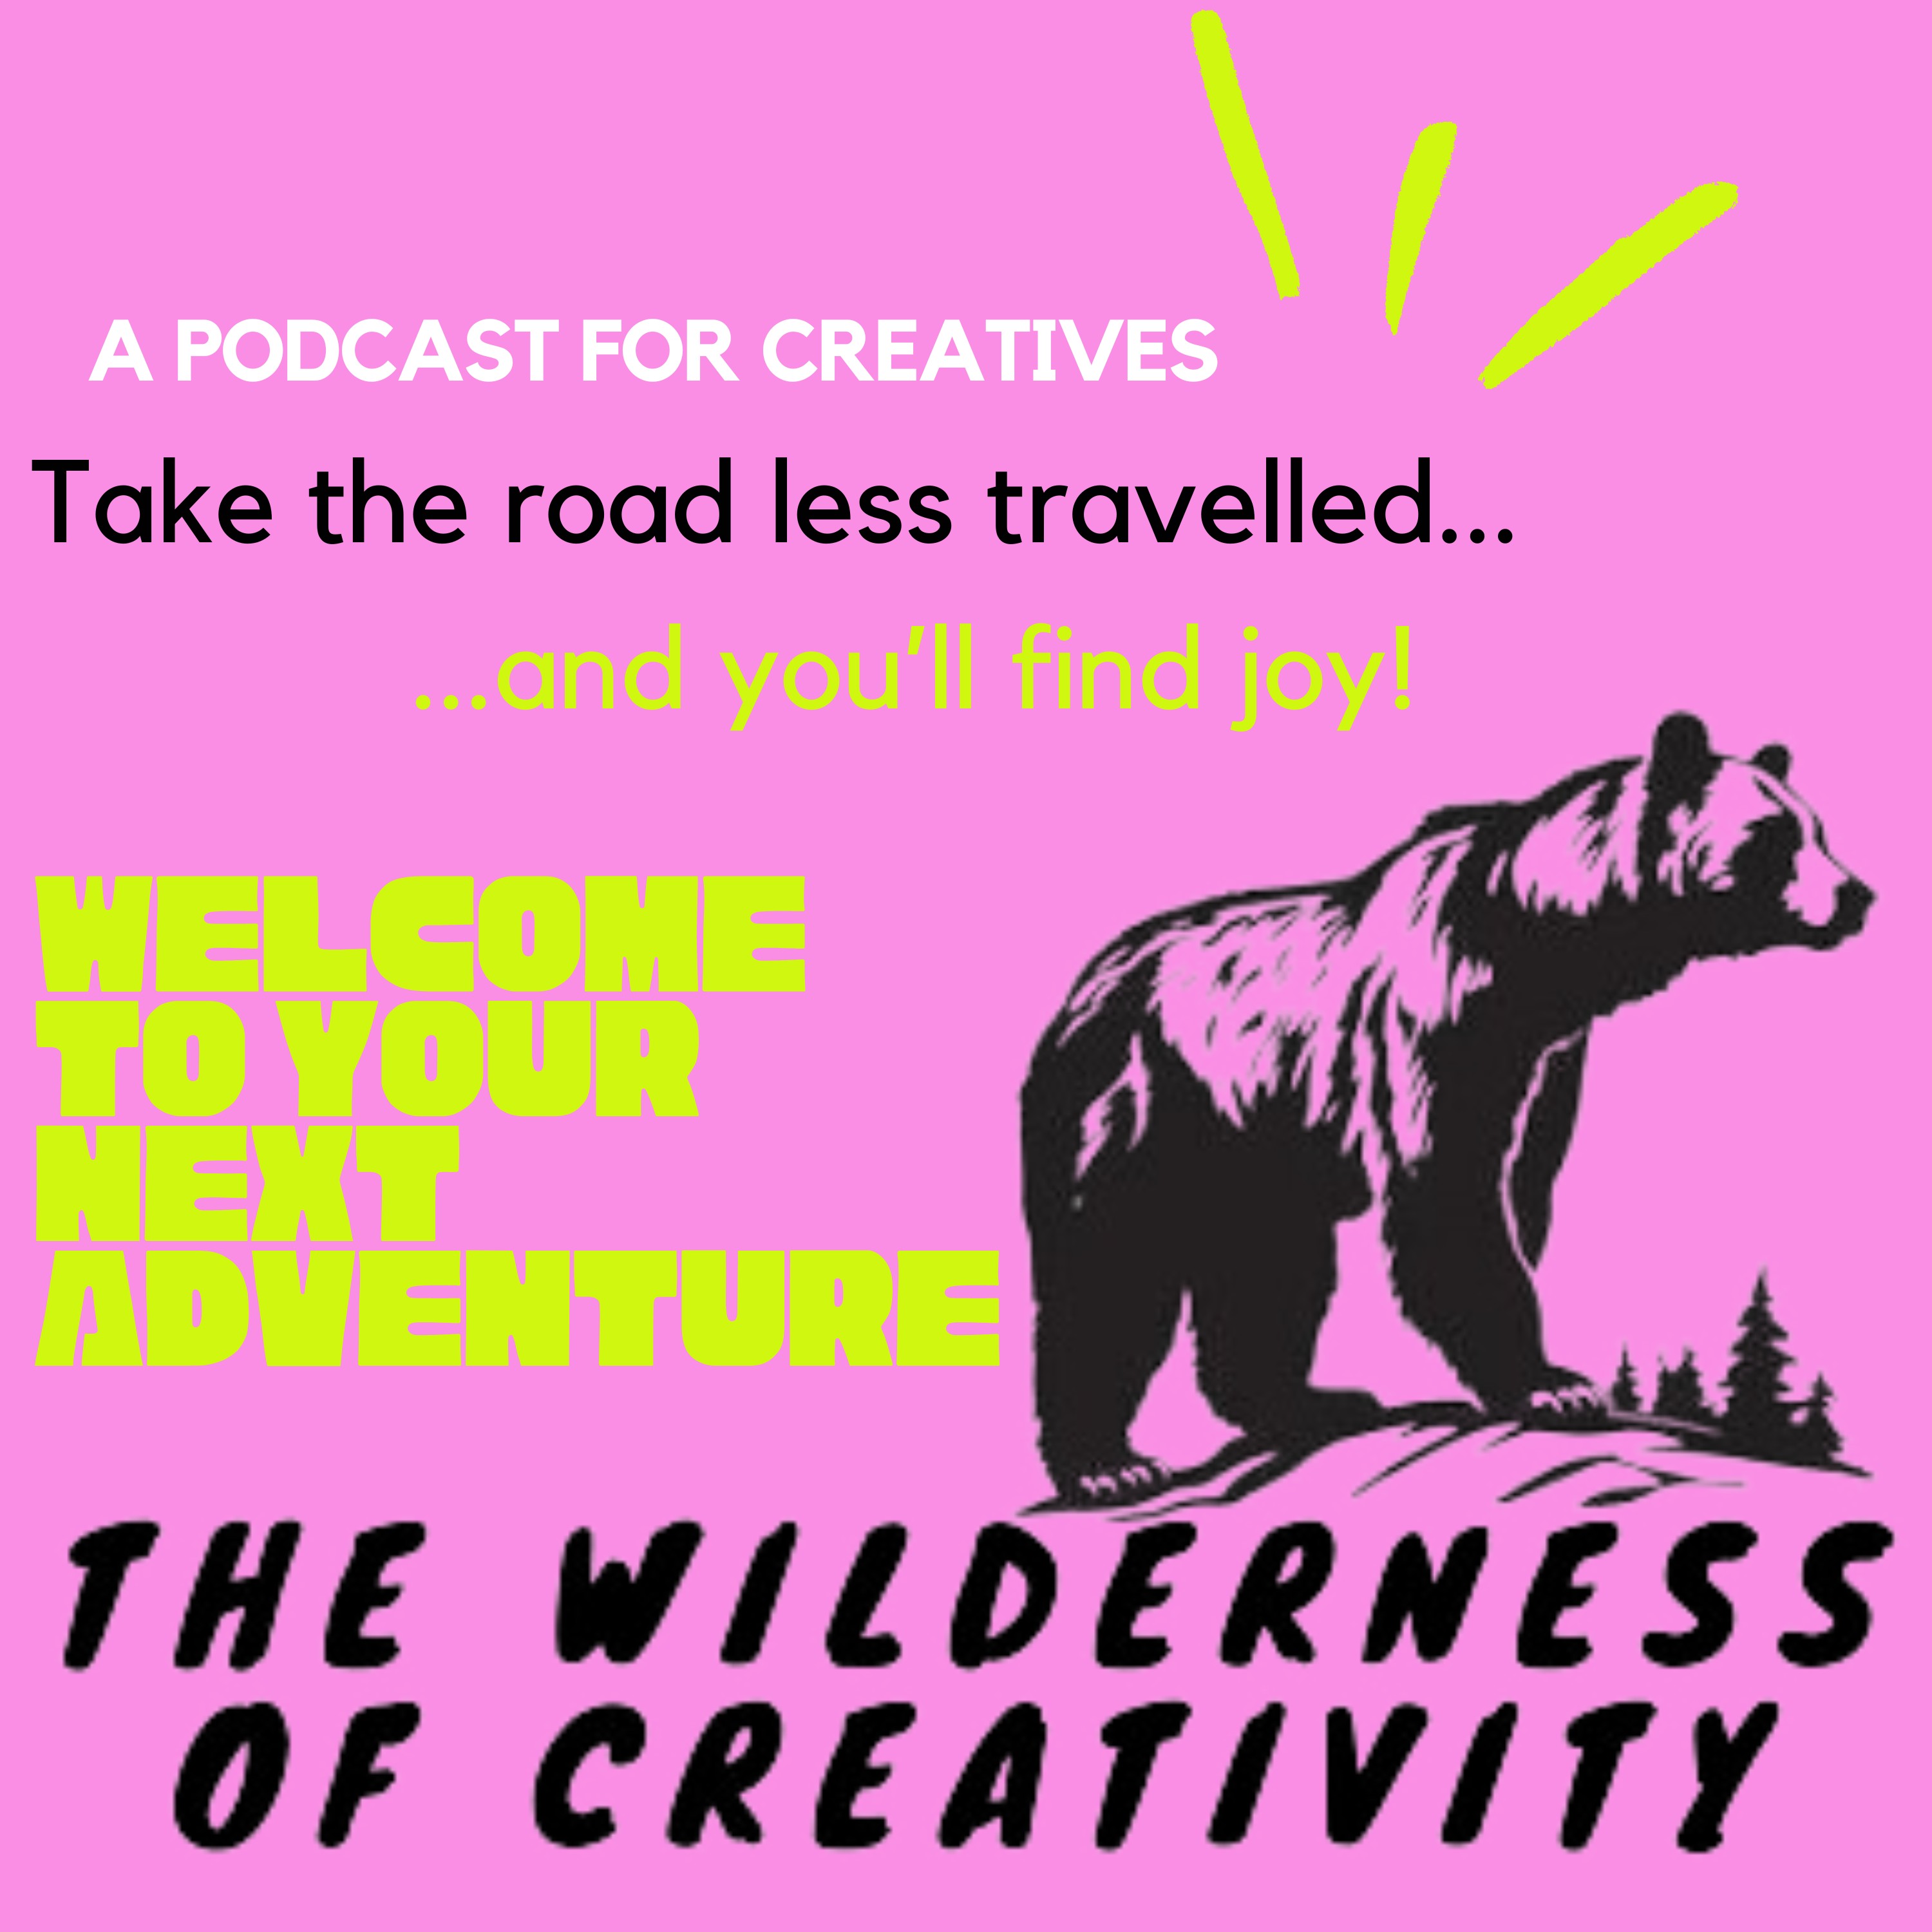 The Wilderness of Creativity